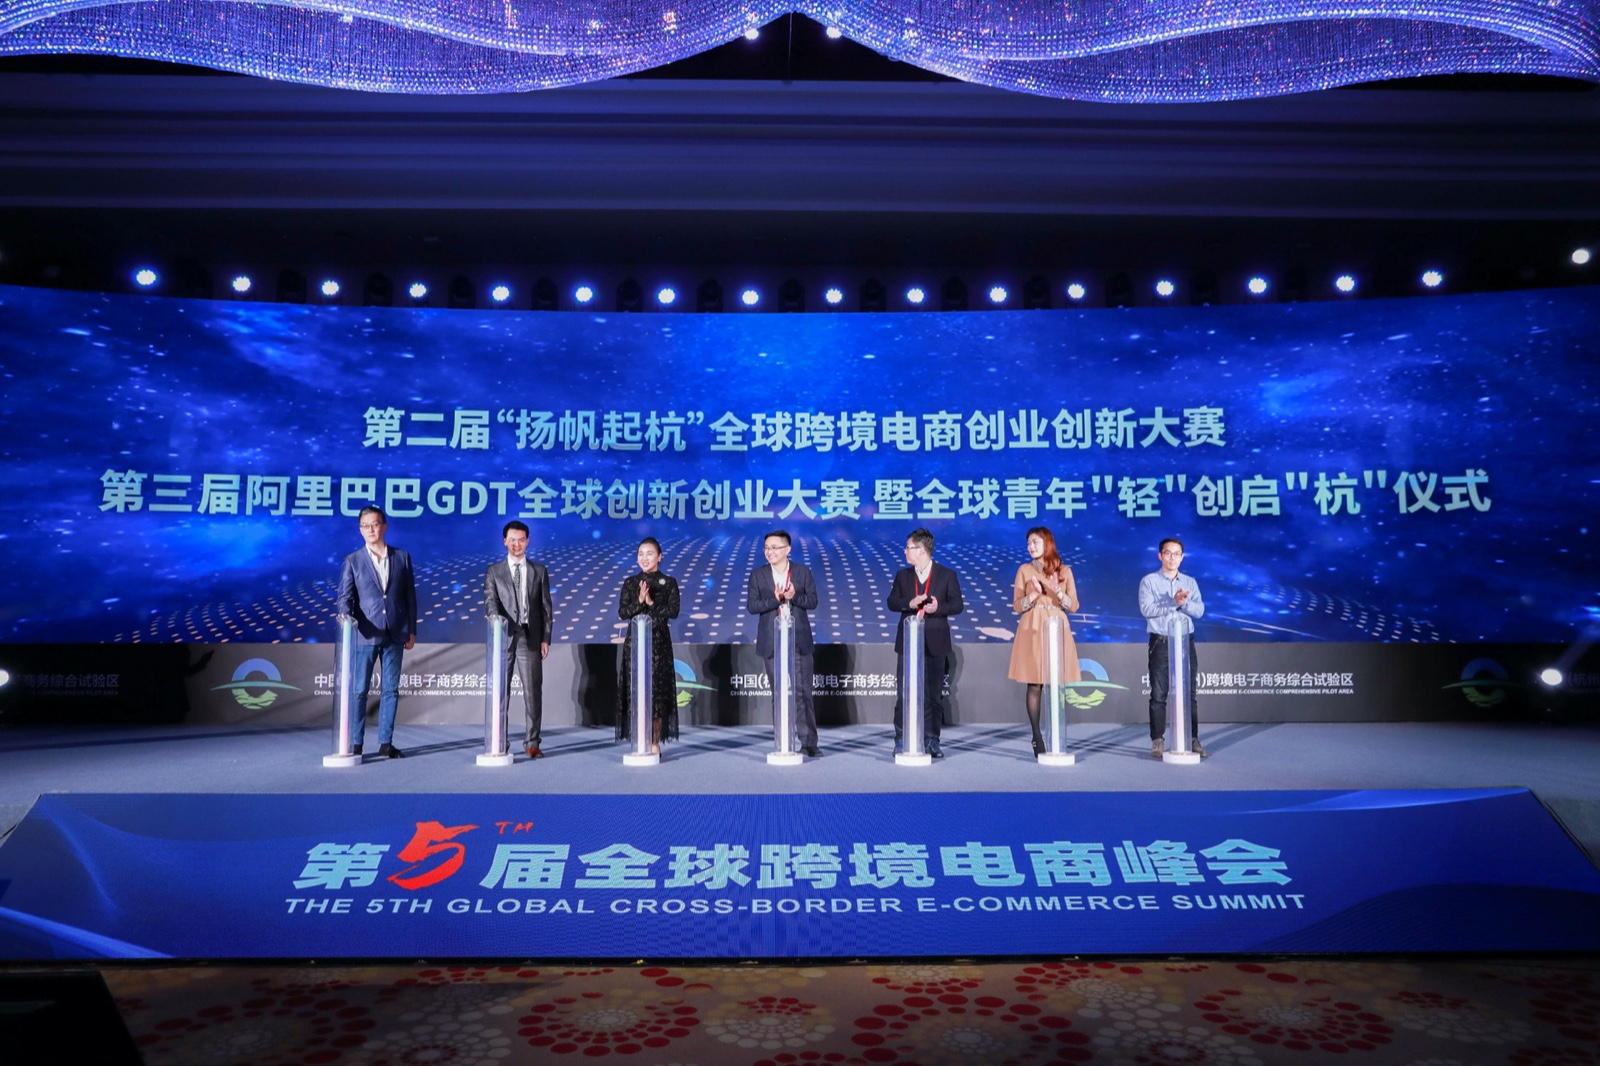 Alibaba Global Digital Talents . Cross-border E-commerce Base Is Open in Hangzhou Today